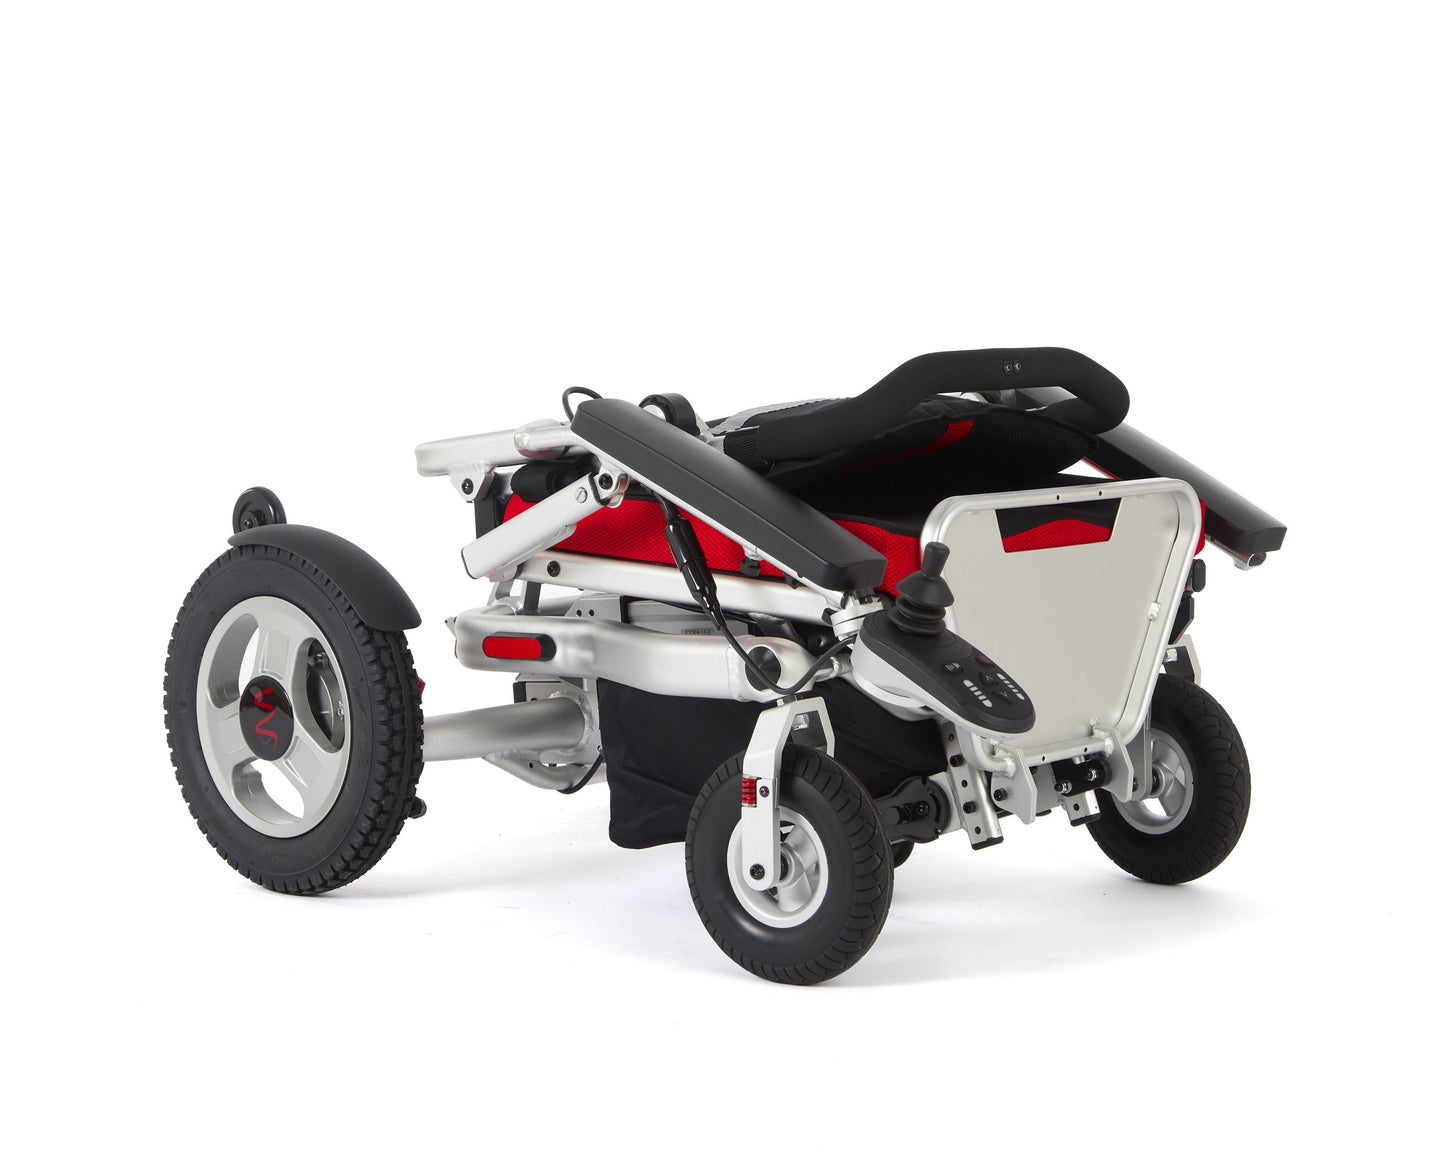 Motion Healthcare Aerolite Trekker Electric Wheelchair - 18 Mile Range!